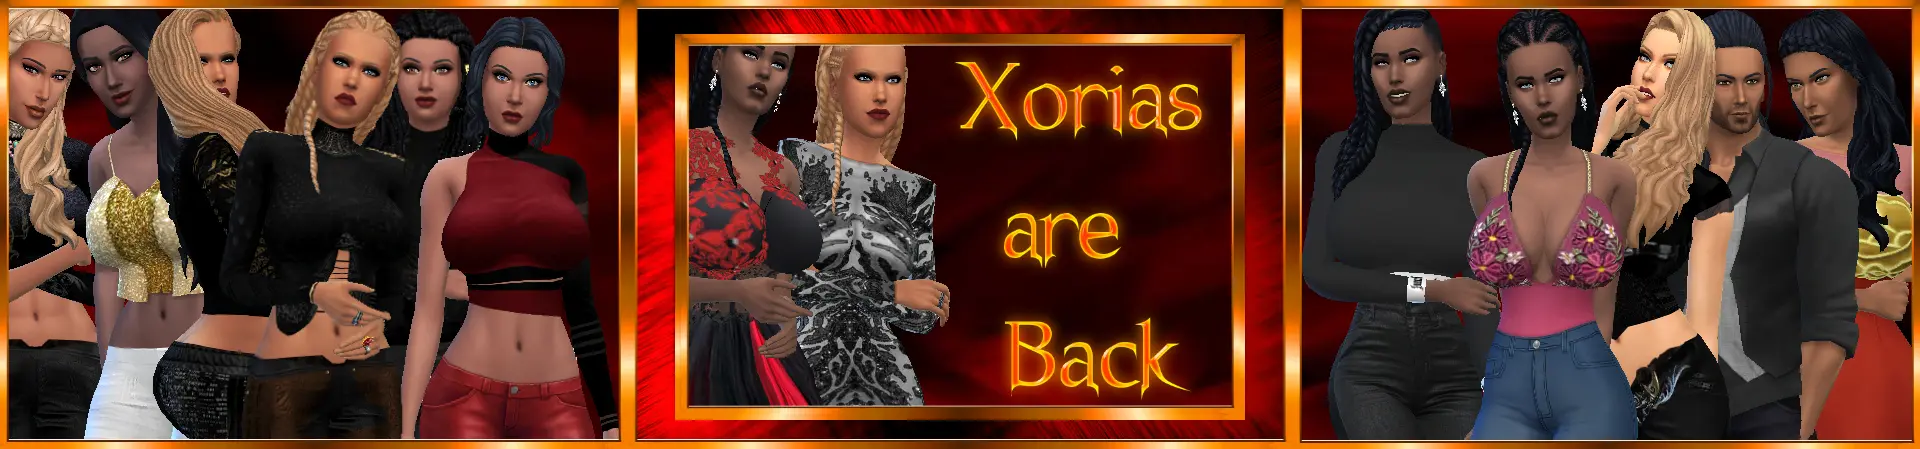 Xorias Are Back [v0.1.0.2] main image